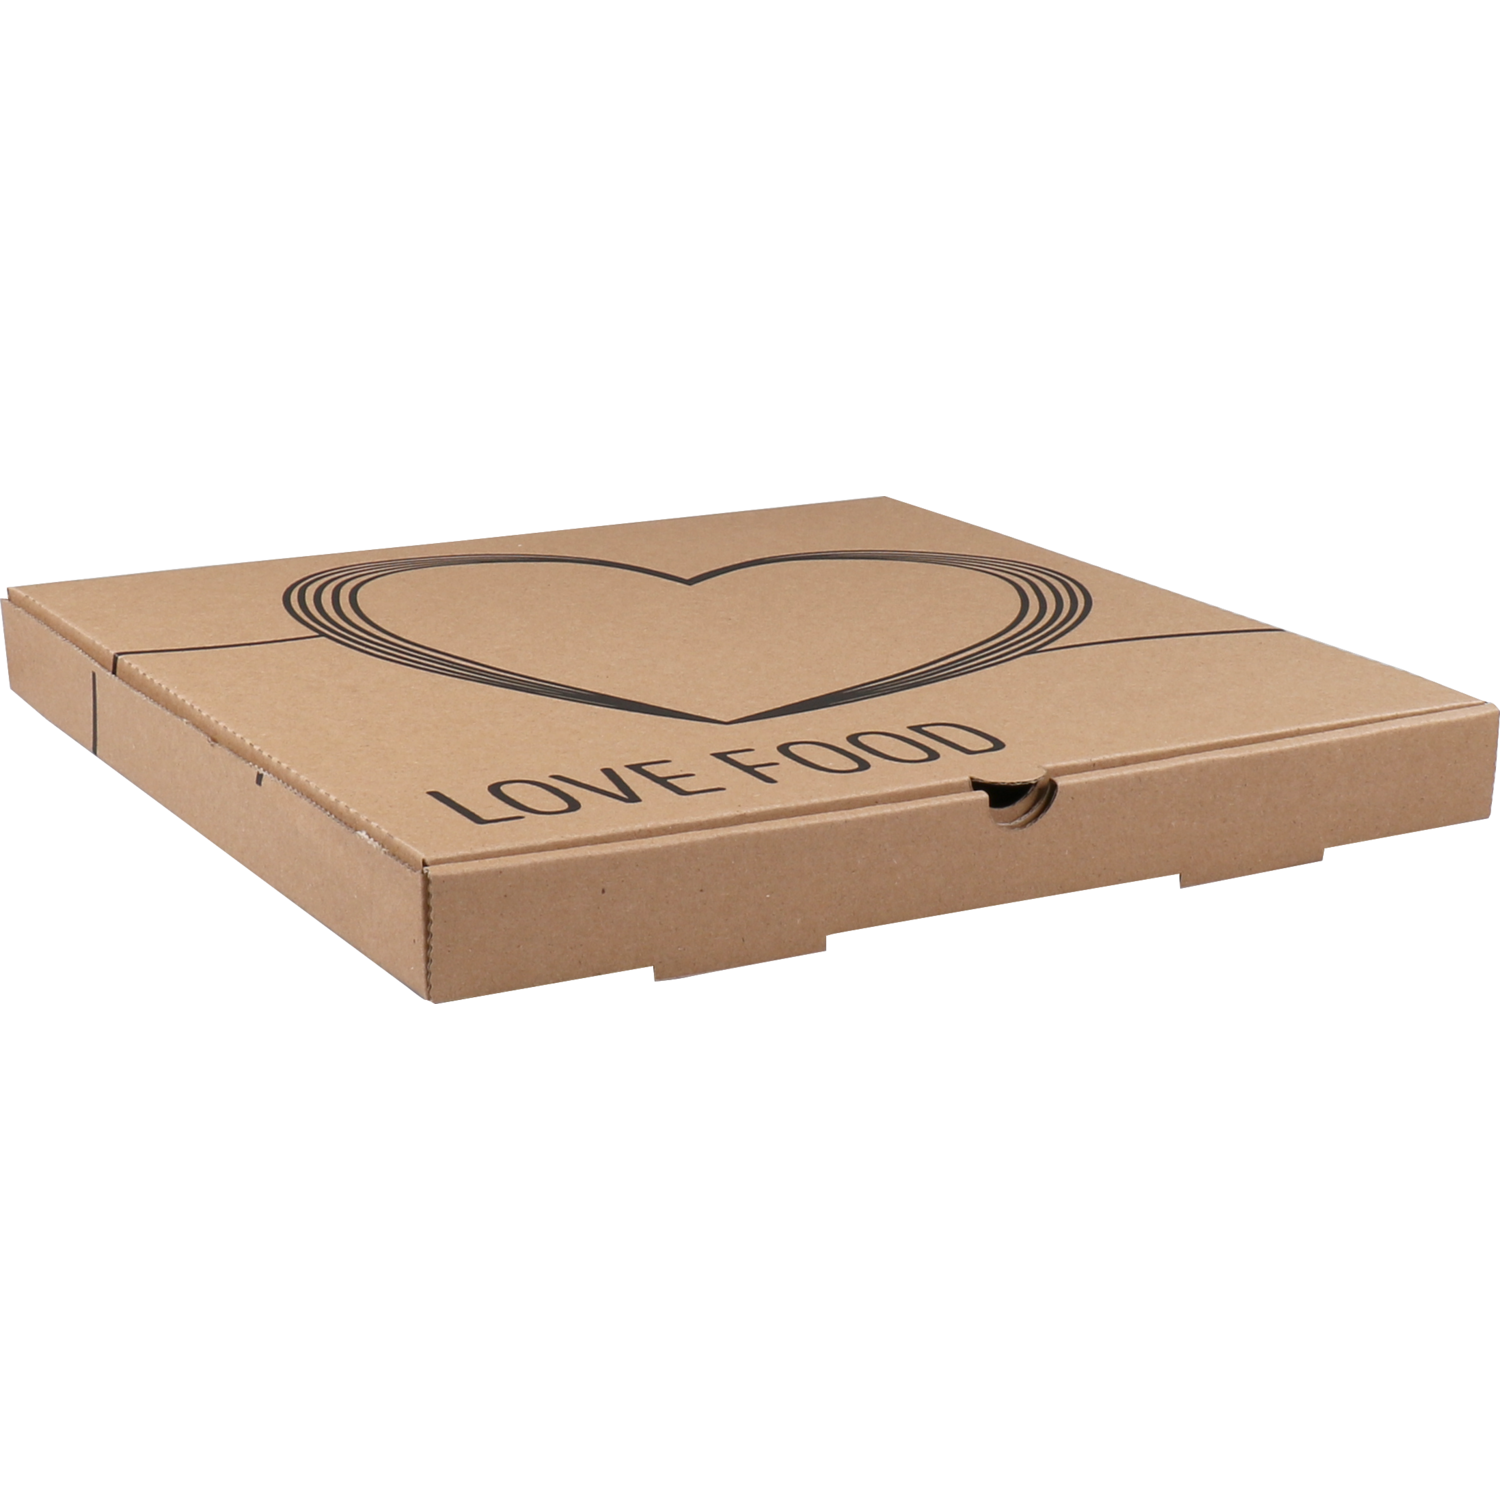  Pizzaschachtel, Americano Love Food, wellpappe, 30x30x3cm, americano, braun 1